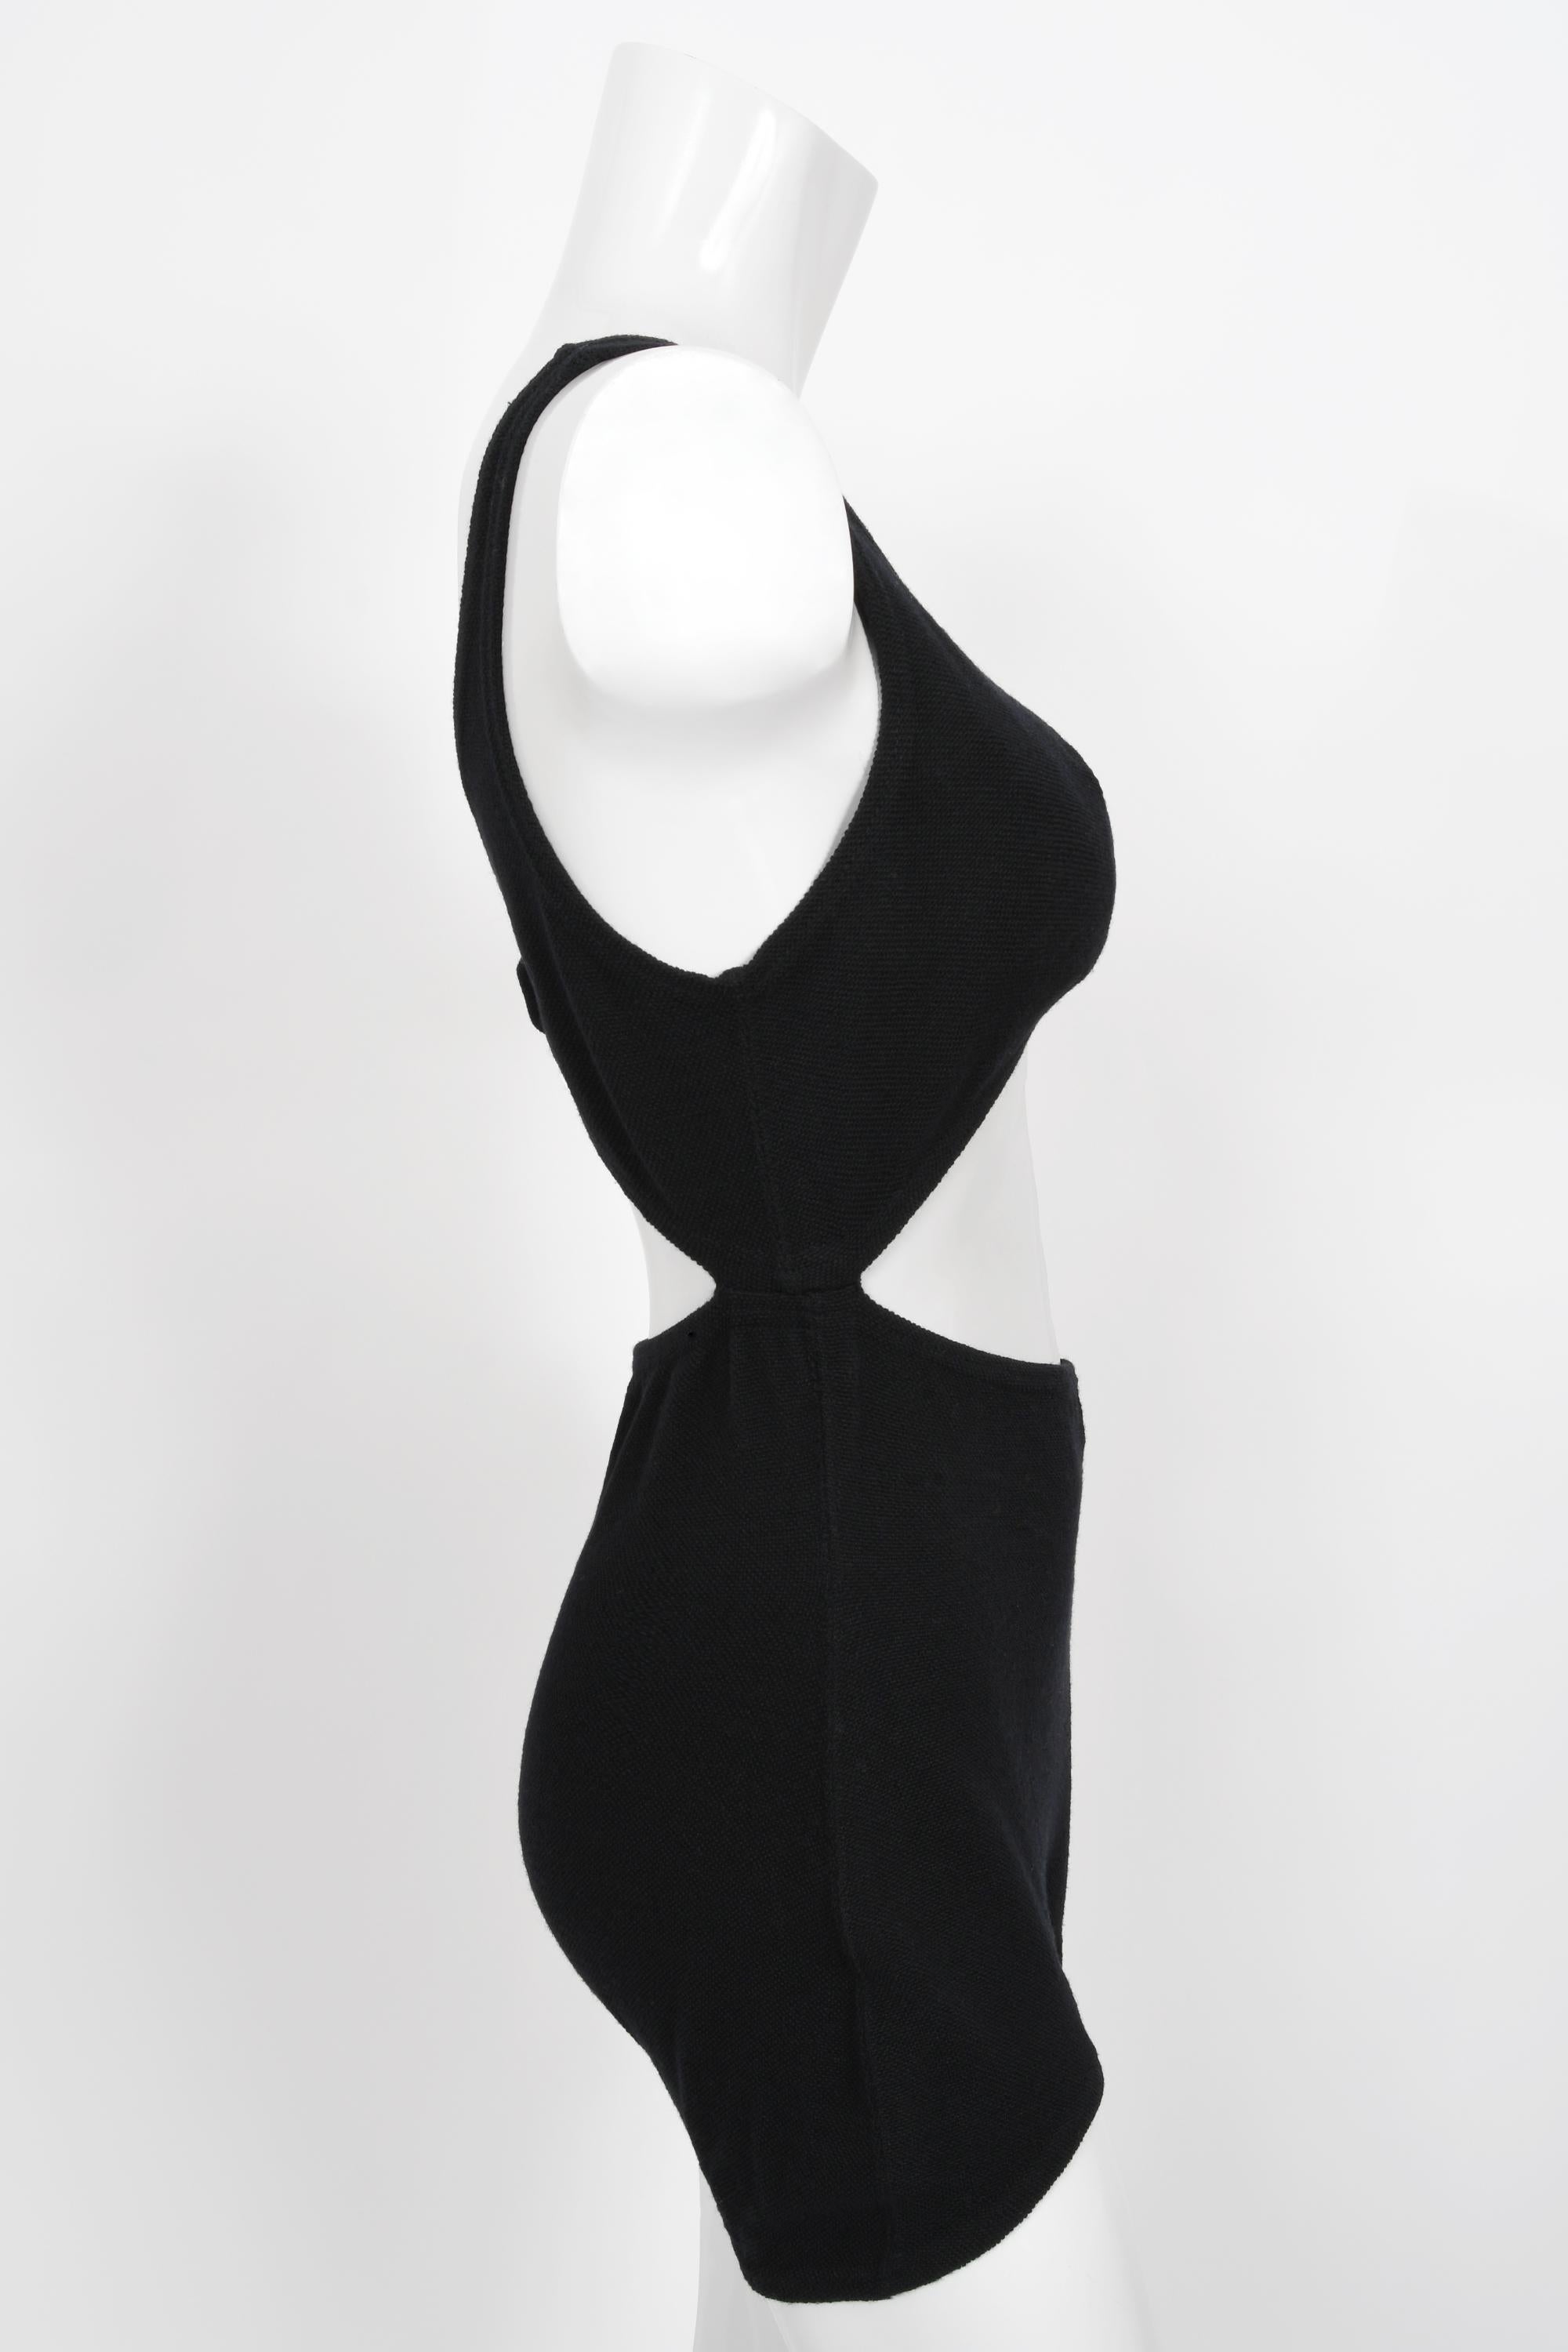 Vintage 1968 Rudi Gernreich Museum-Held Black Wool Jersey Cut Out Mod Swimsuit  For Sale 3